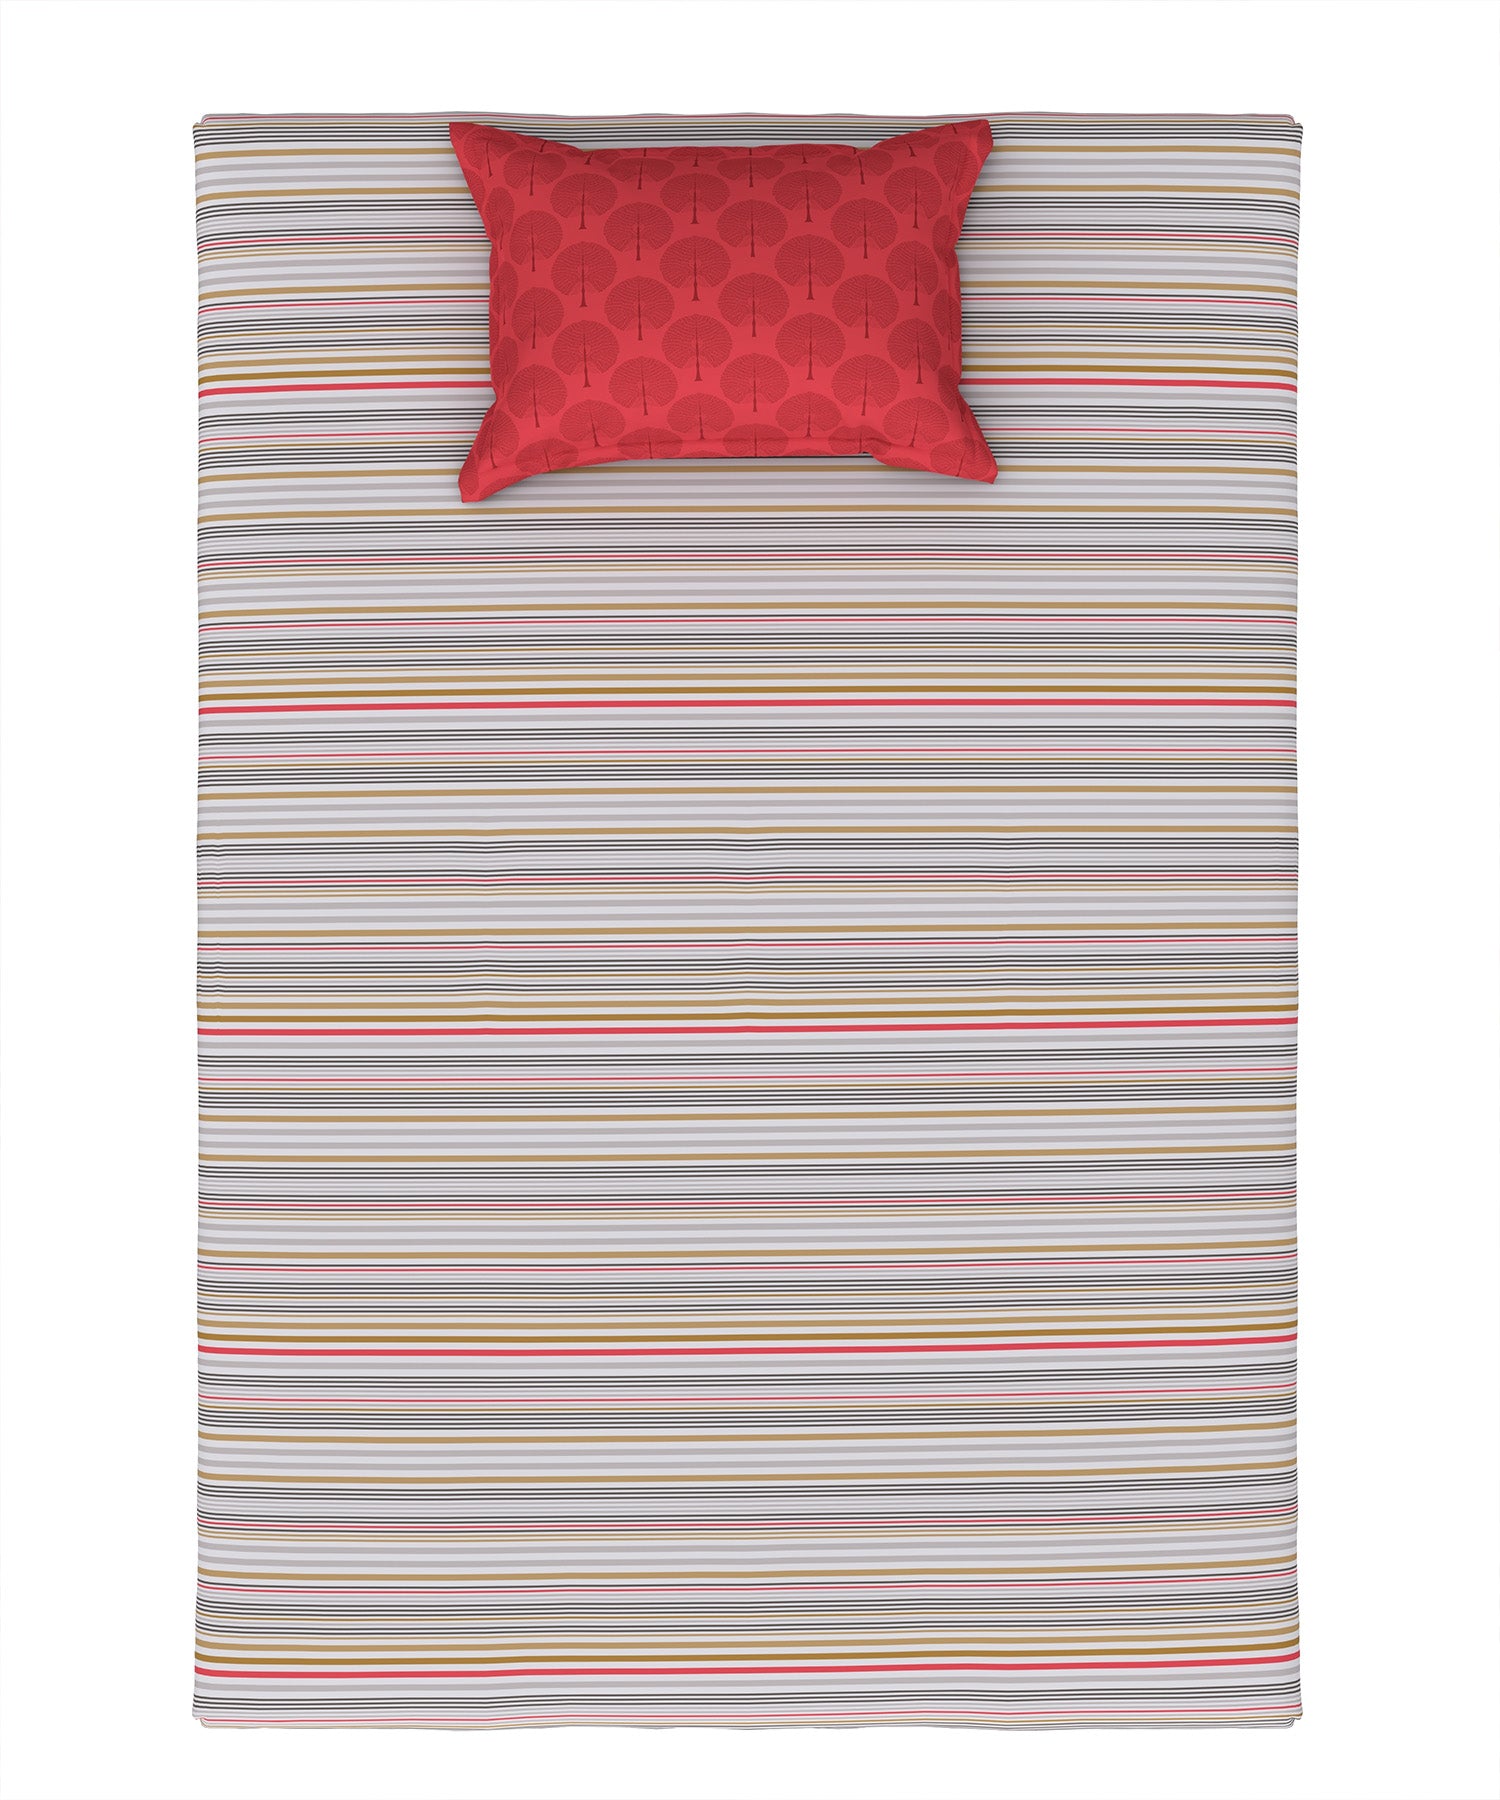 Single Size Bedsheet ₹719/-